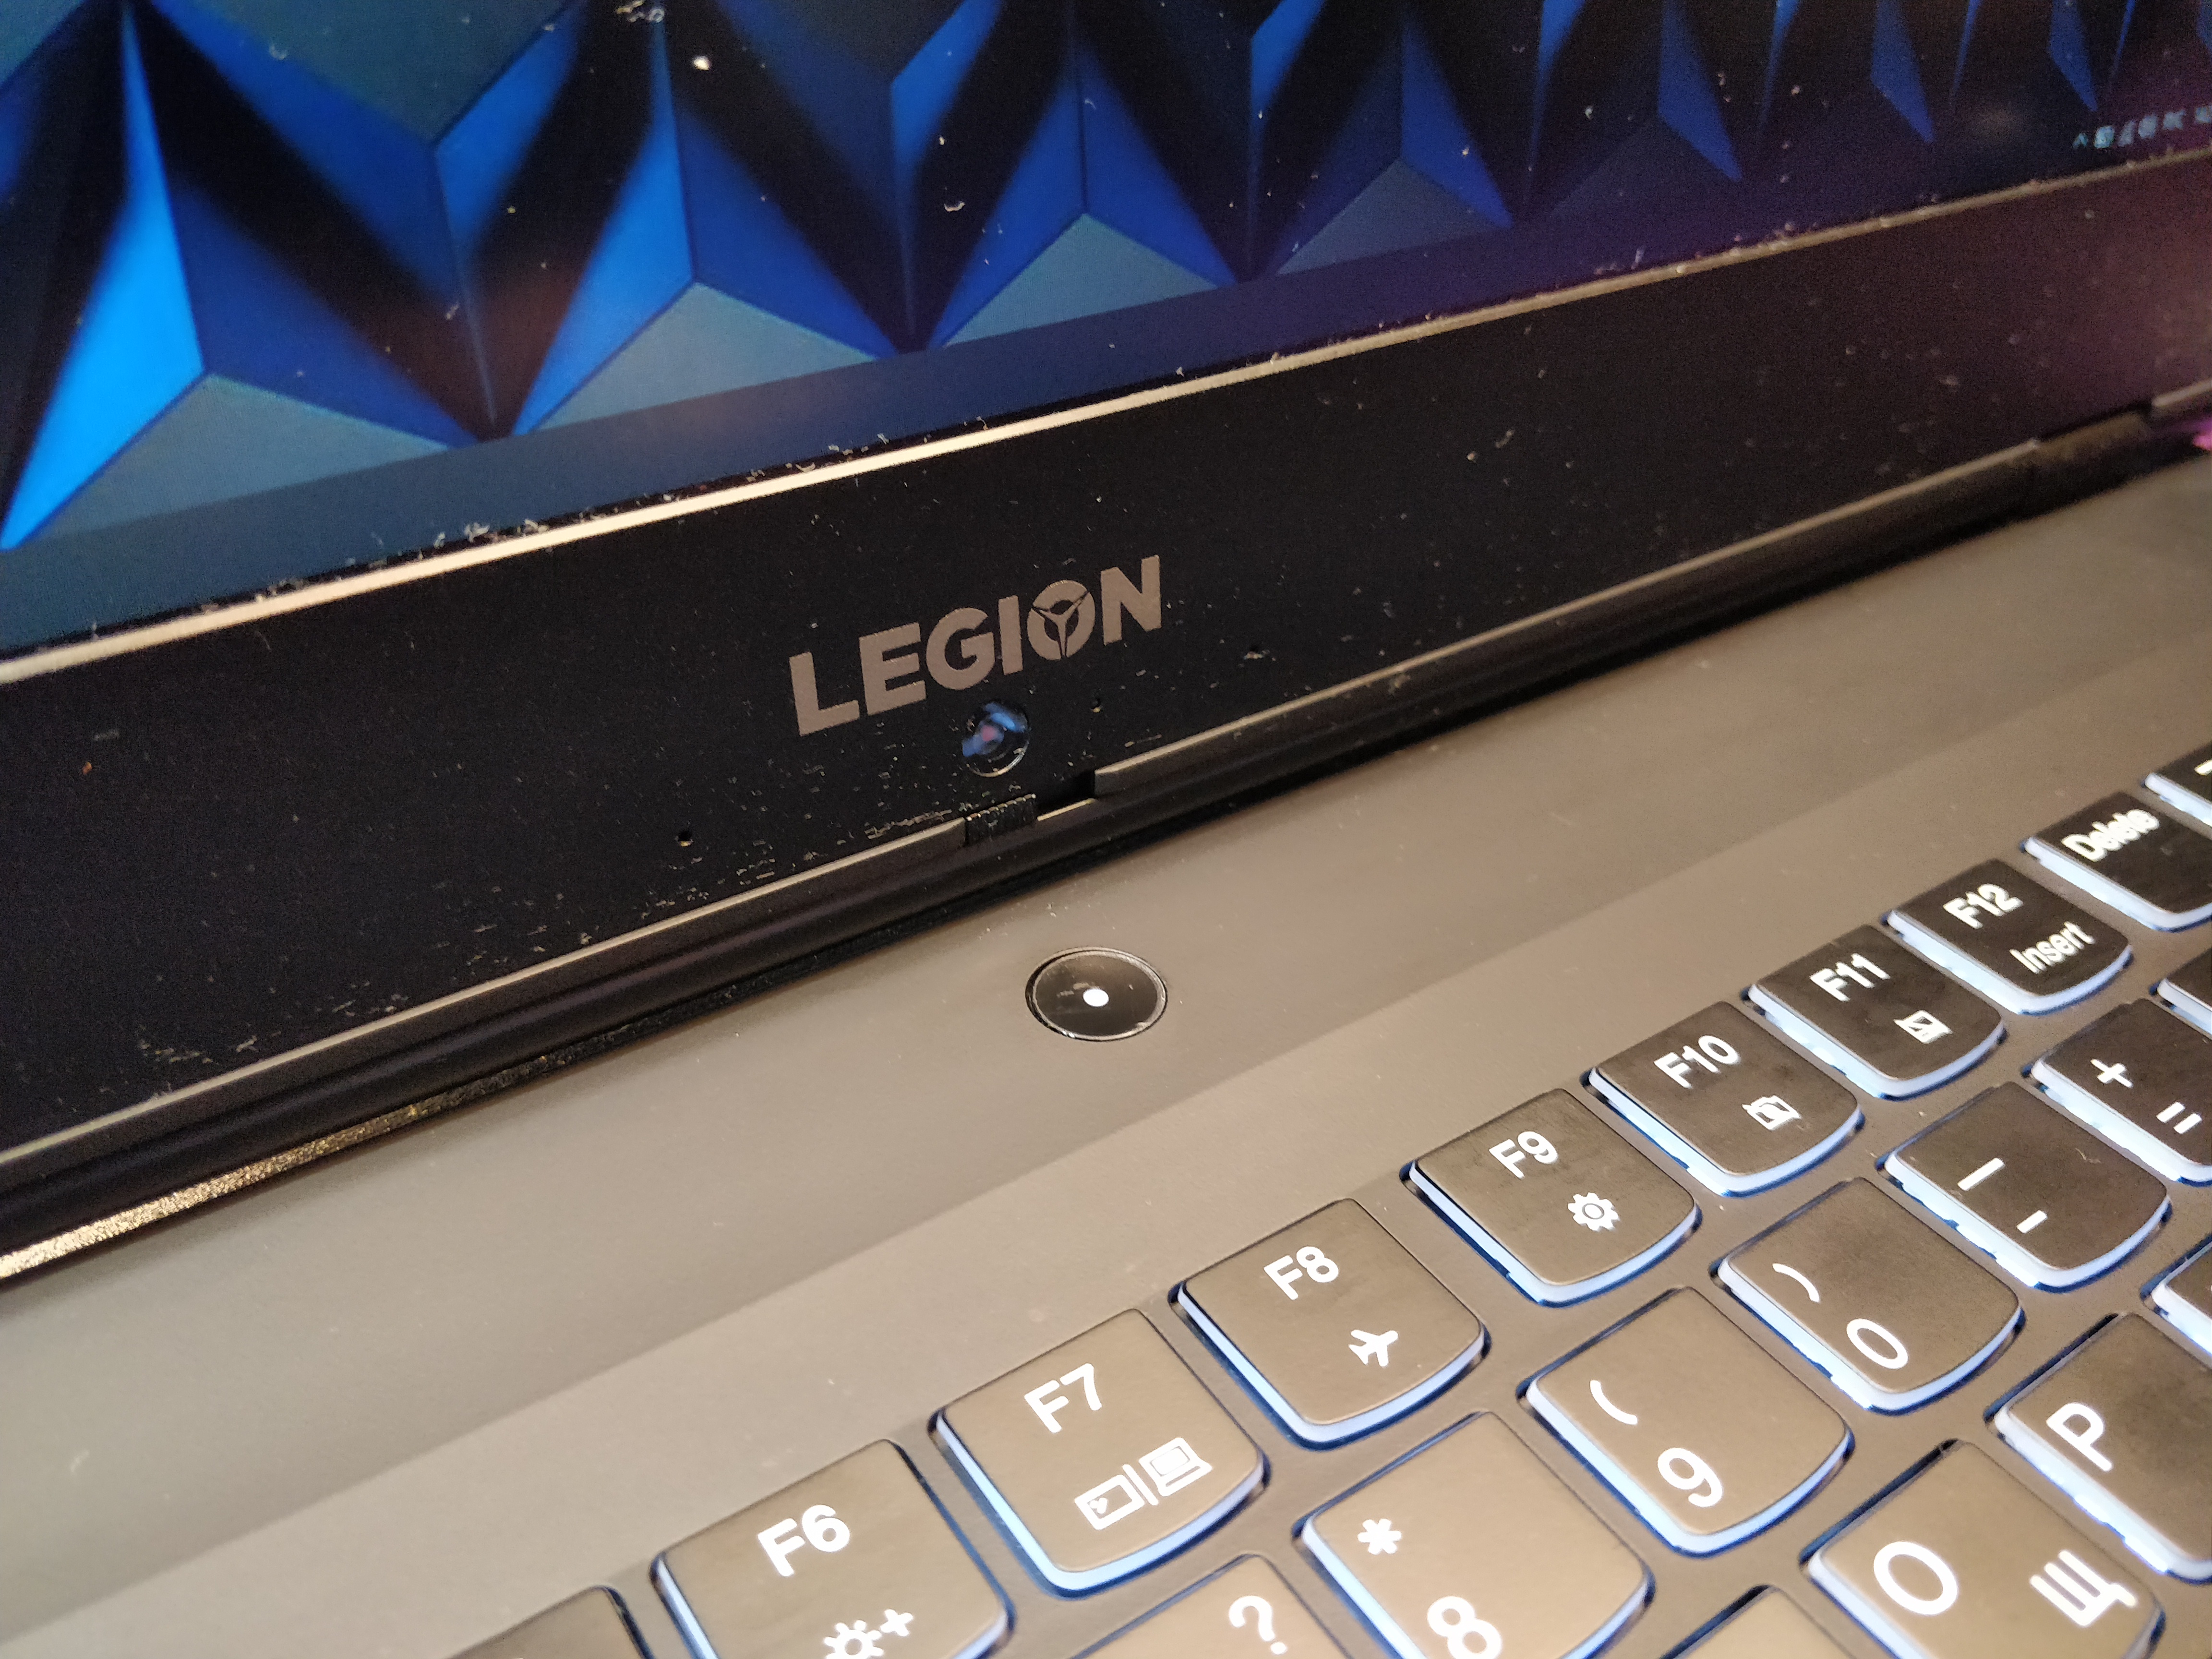 Ноутбук Леново Легион Цена